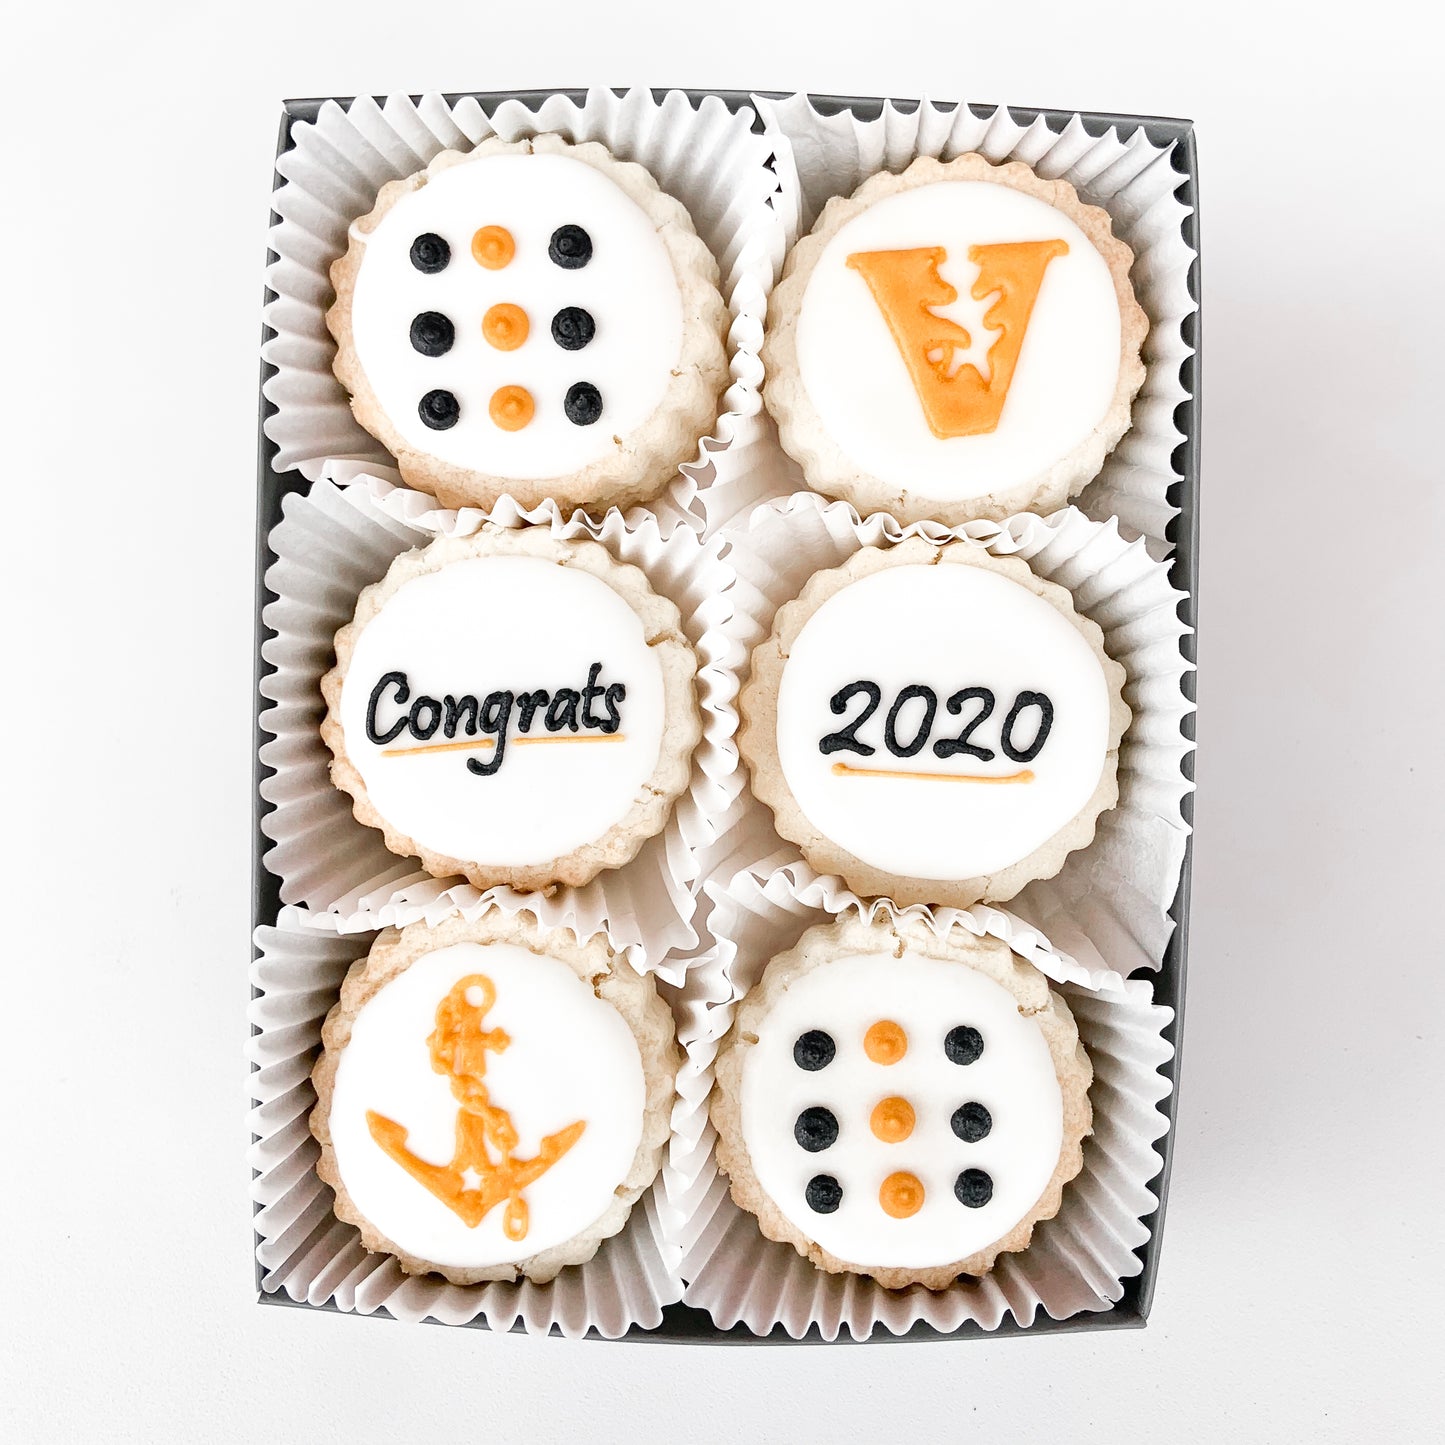 "Congrats" Gourmet Decorated Shortbread Gift Tins